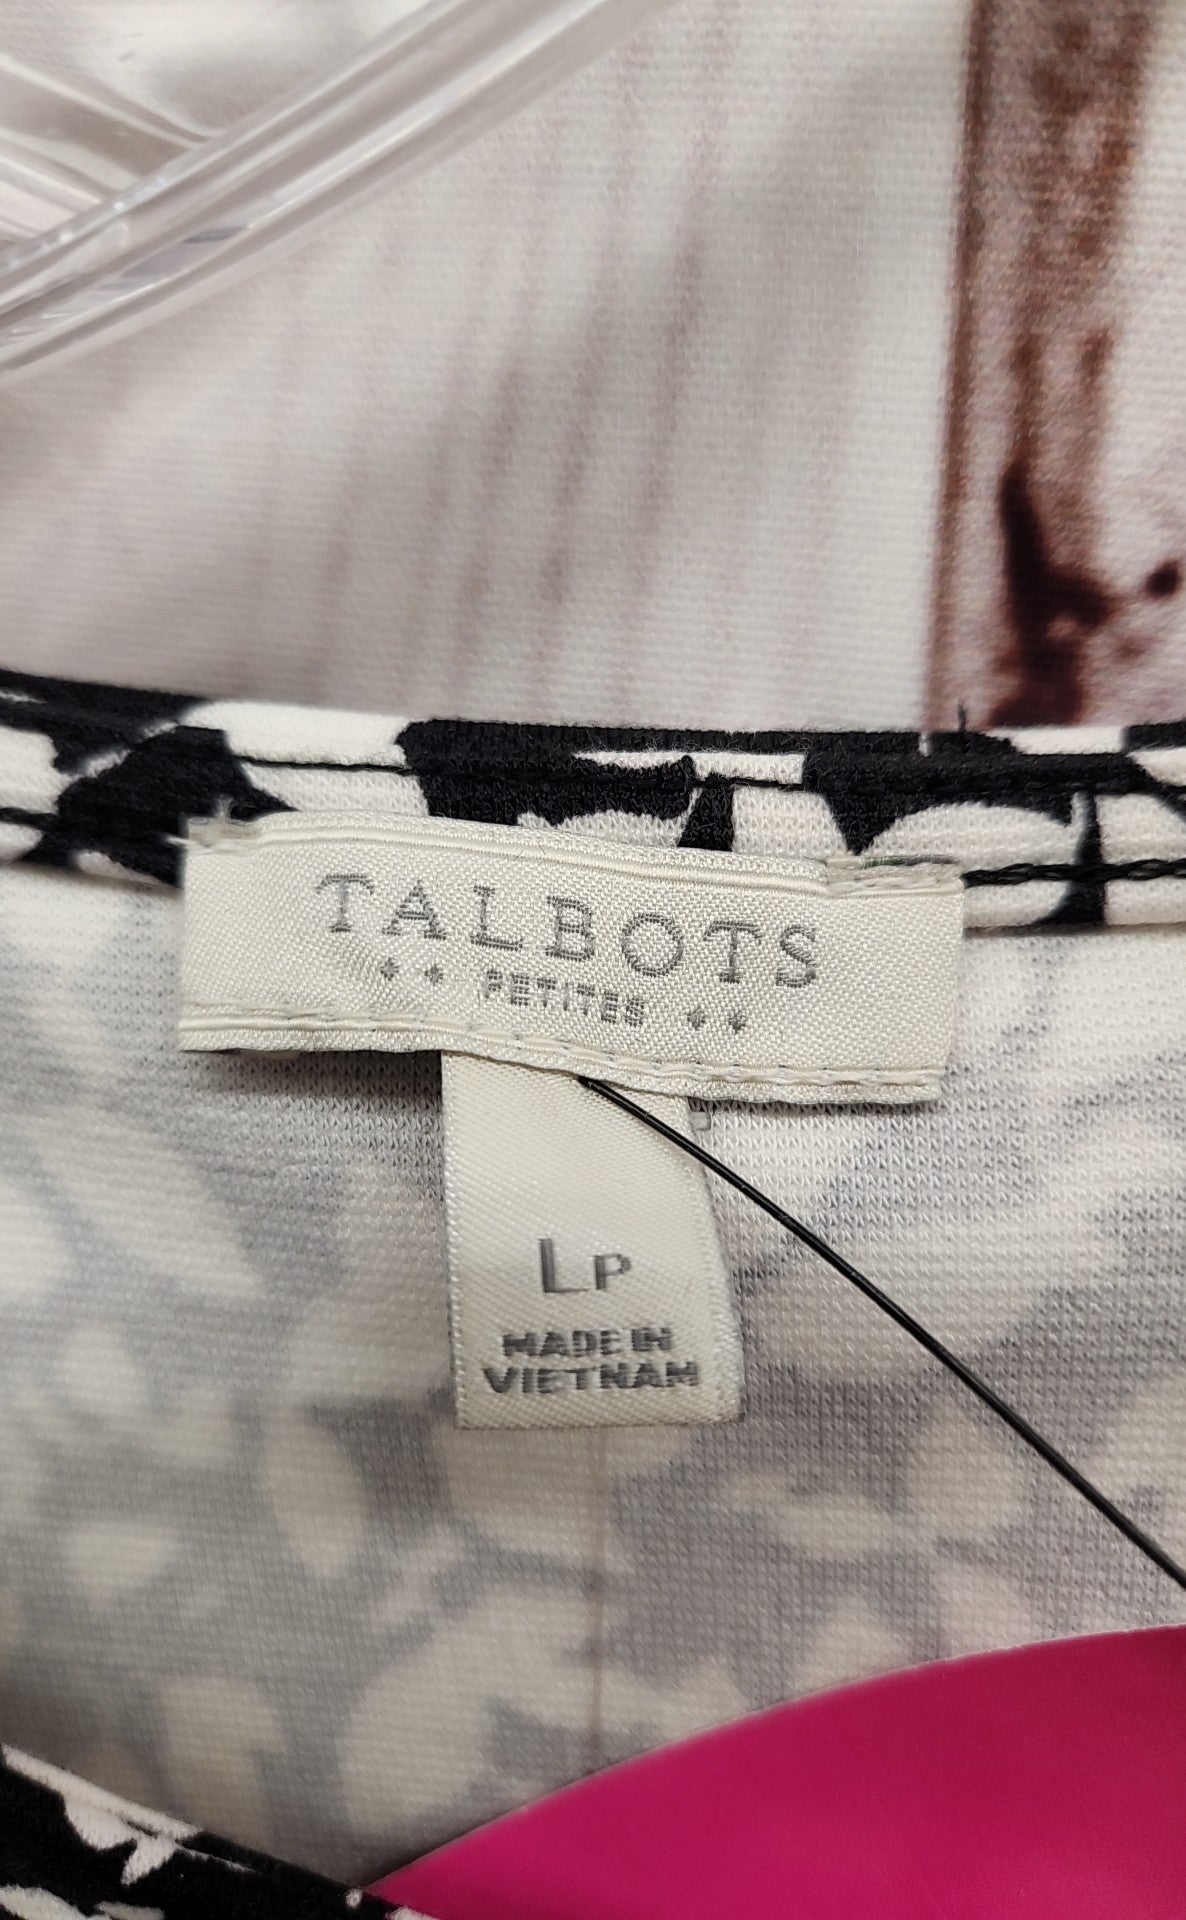 Talbots Women's Size L Petite Black Floral Dress NWT